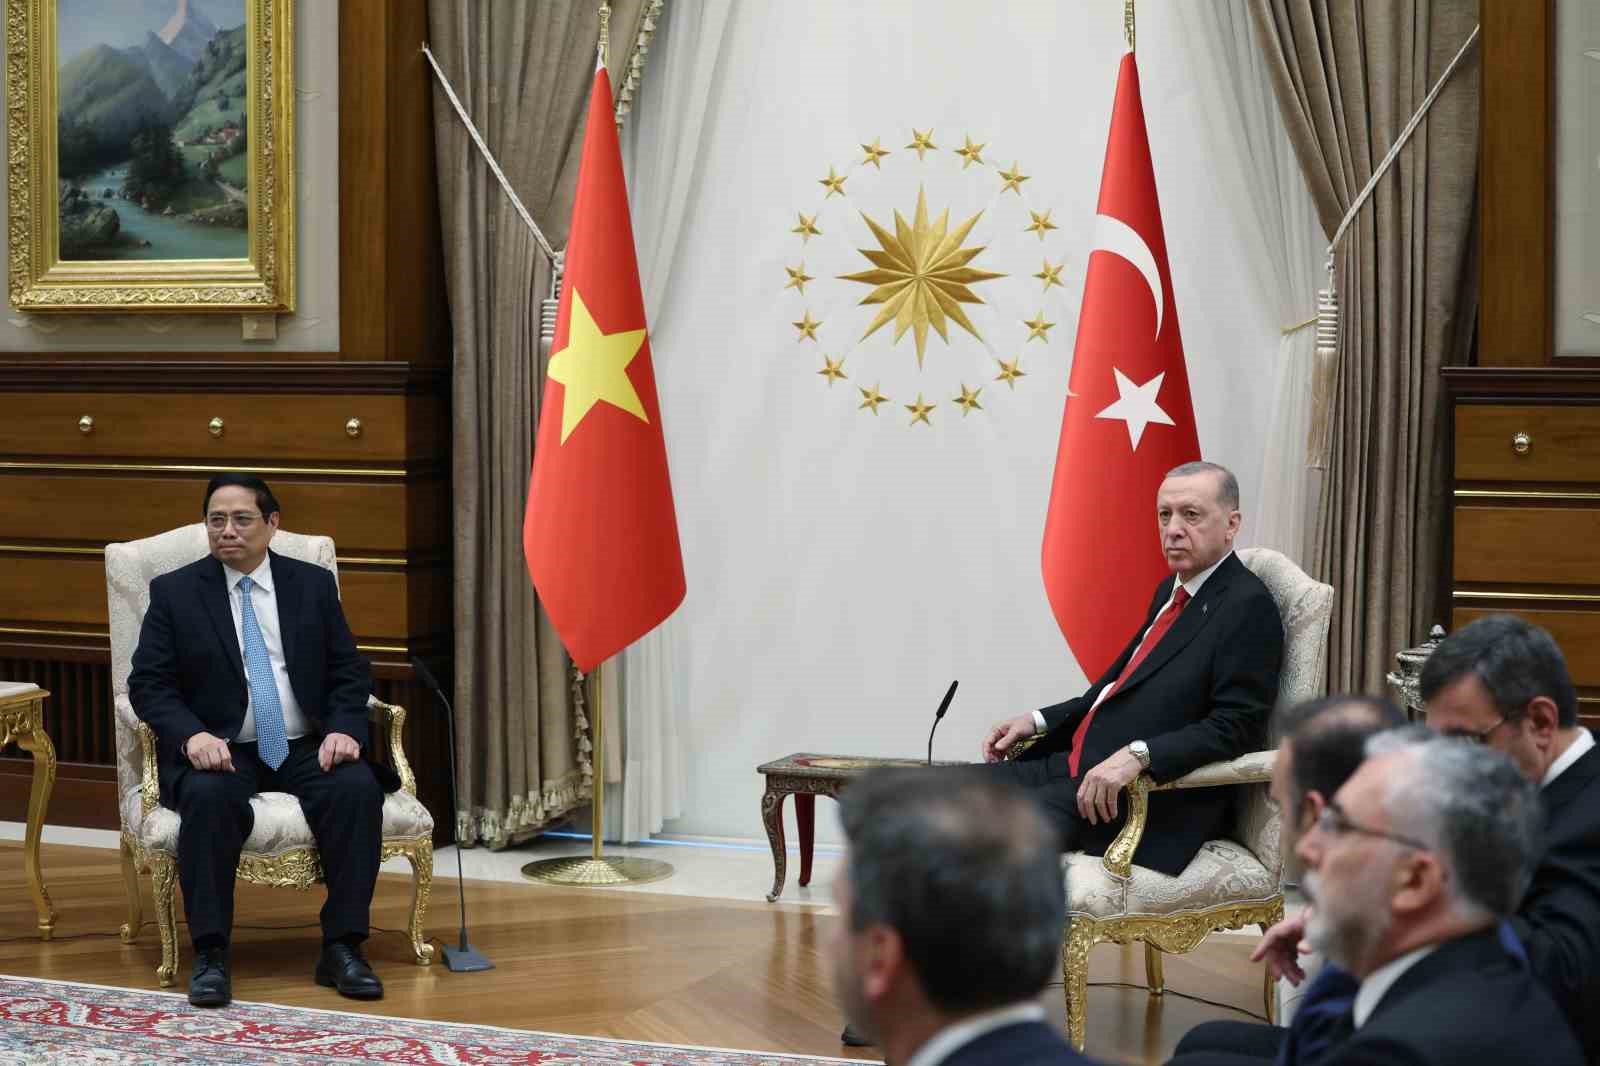 Cumhurbaşkanı Erdoğan, Vietnam Başbakanı Pham Minh Chinh’i Cumhurbaşkanlığı Külliyesi’nde kabul etti.